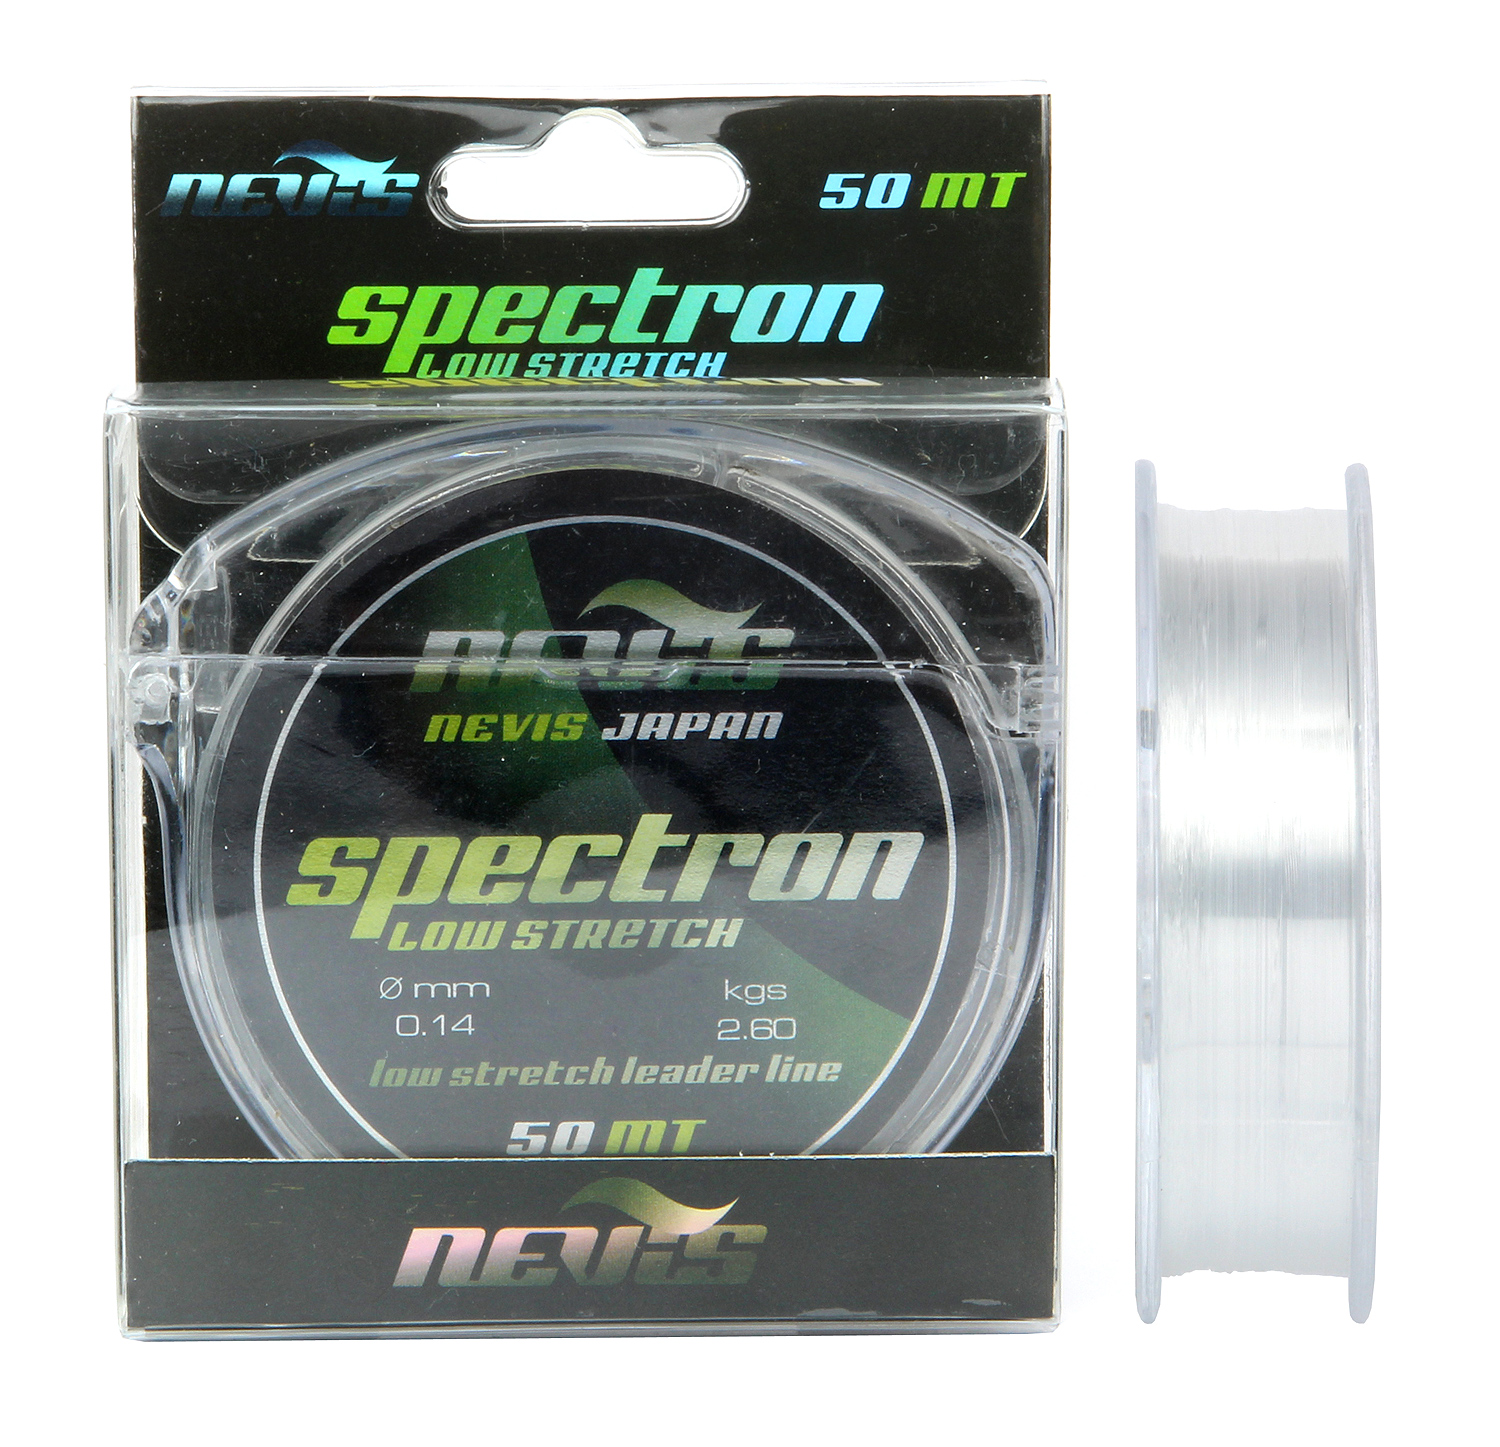 Spectron 50m/0.16mm